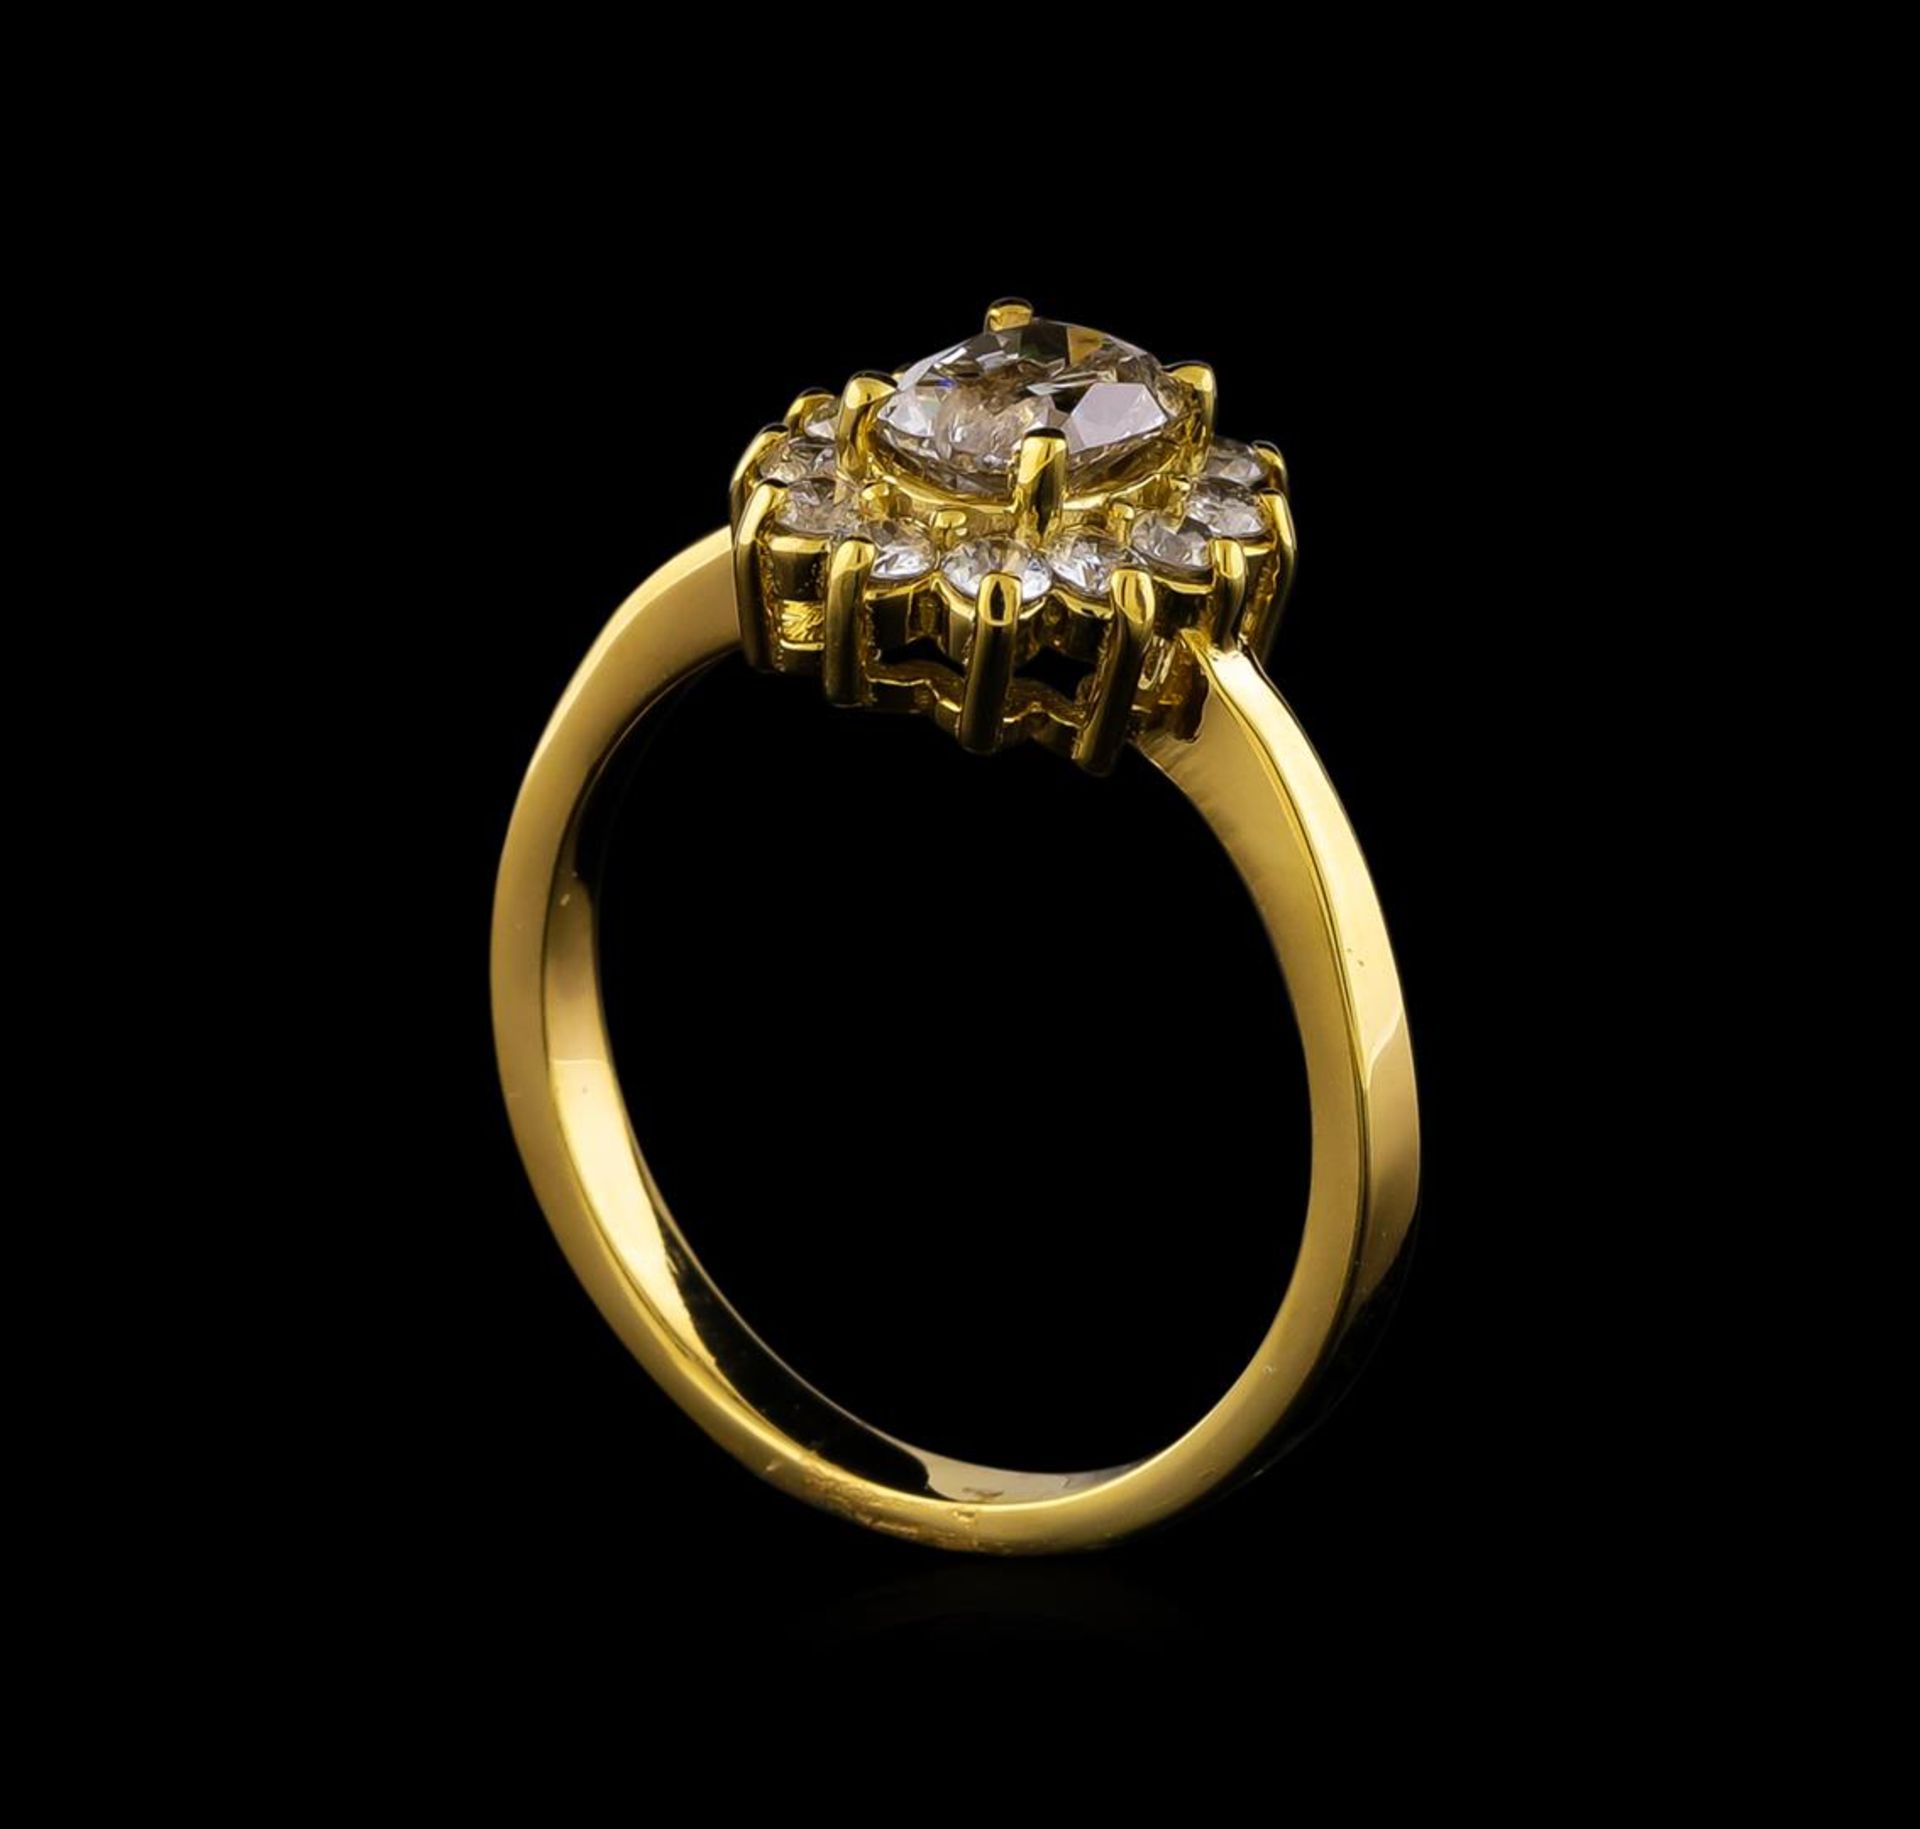 0.95 ctw Diamond Ring - 14KT Yellow Gold - Image 4 of 4